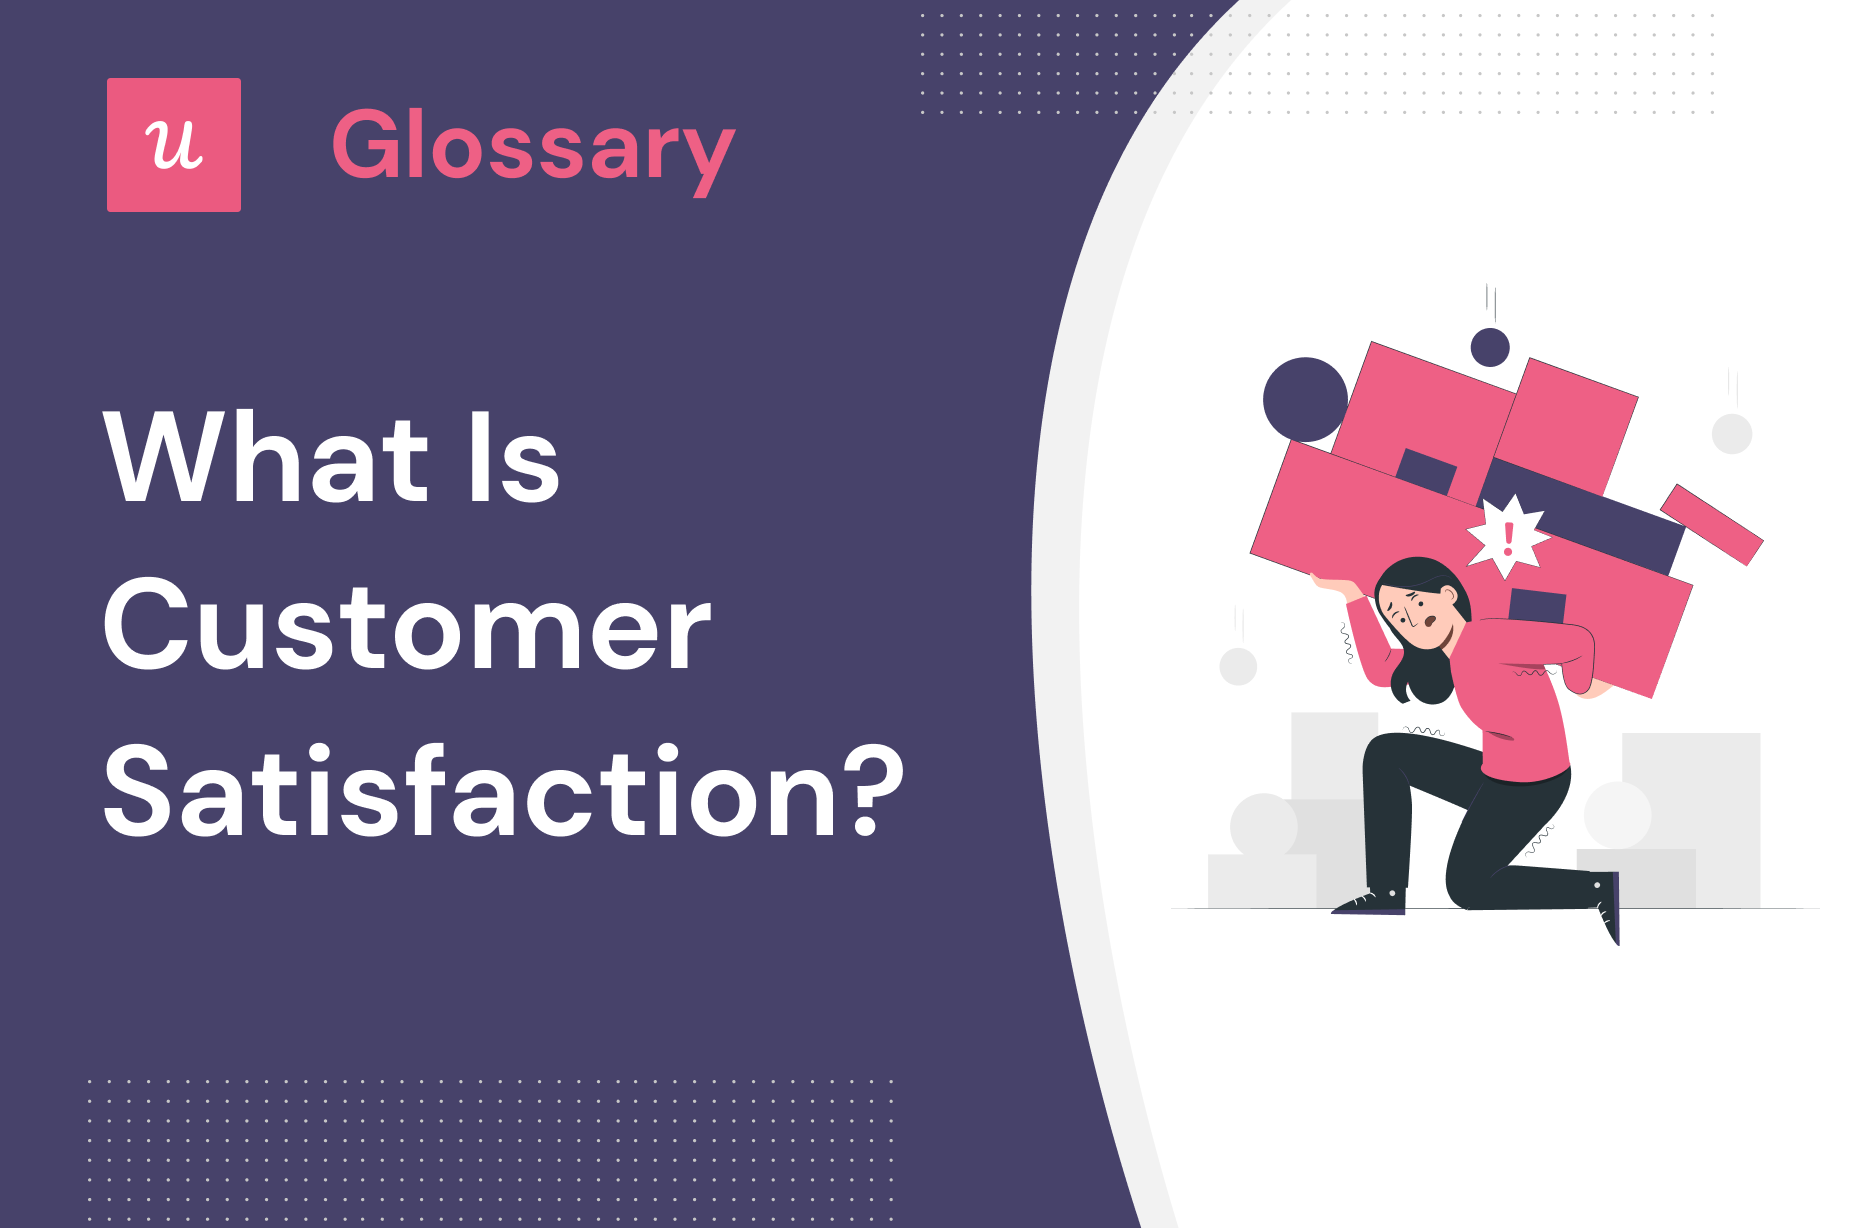 What is Customer Satisfaction?